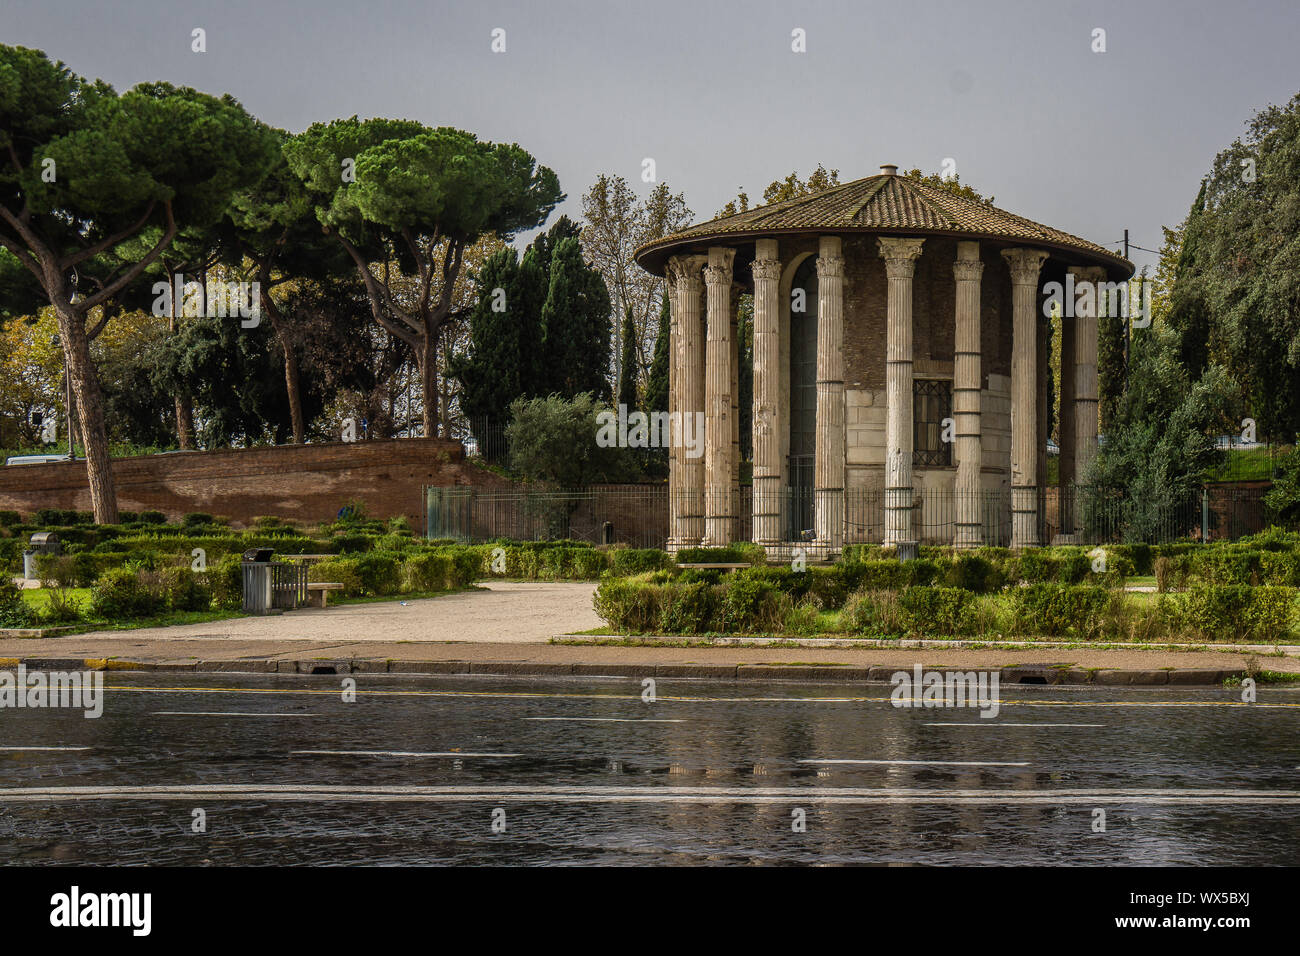 El Tempio di Ercole Vincitore Historia Ciudad Imperio de Roma Foto de stock